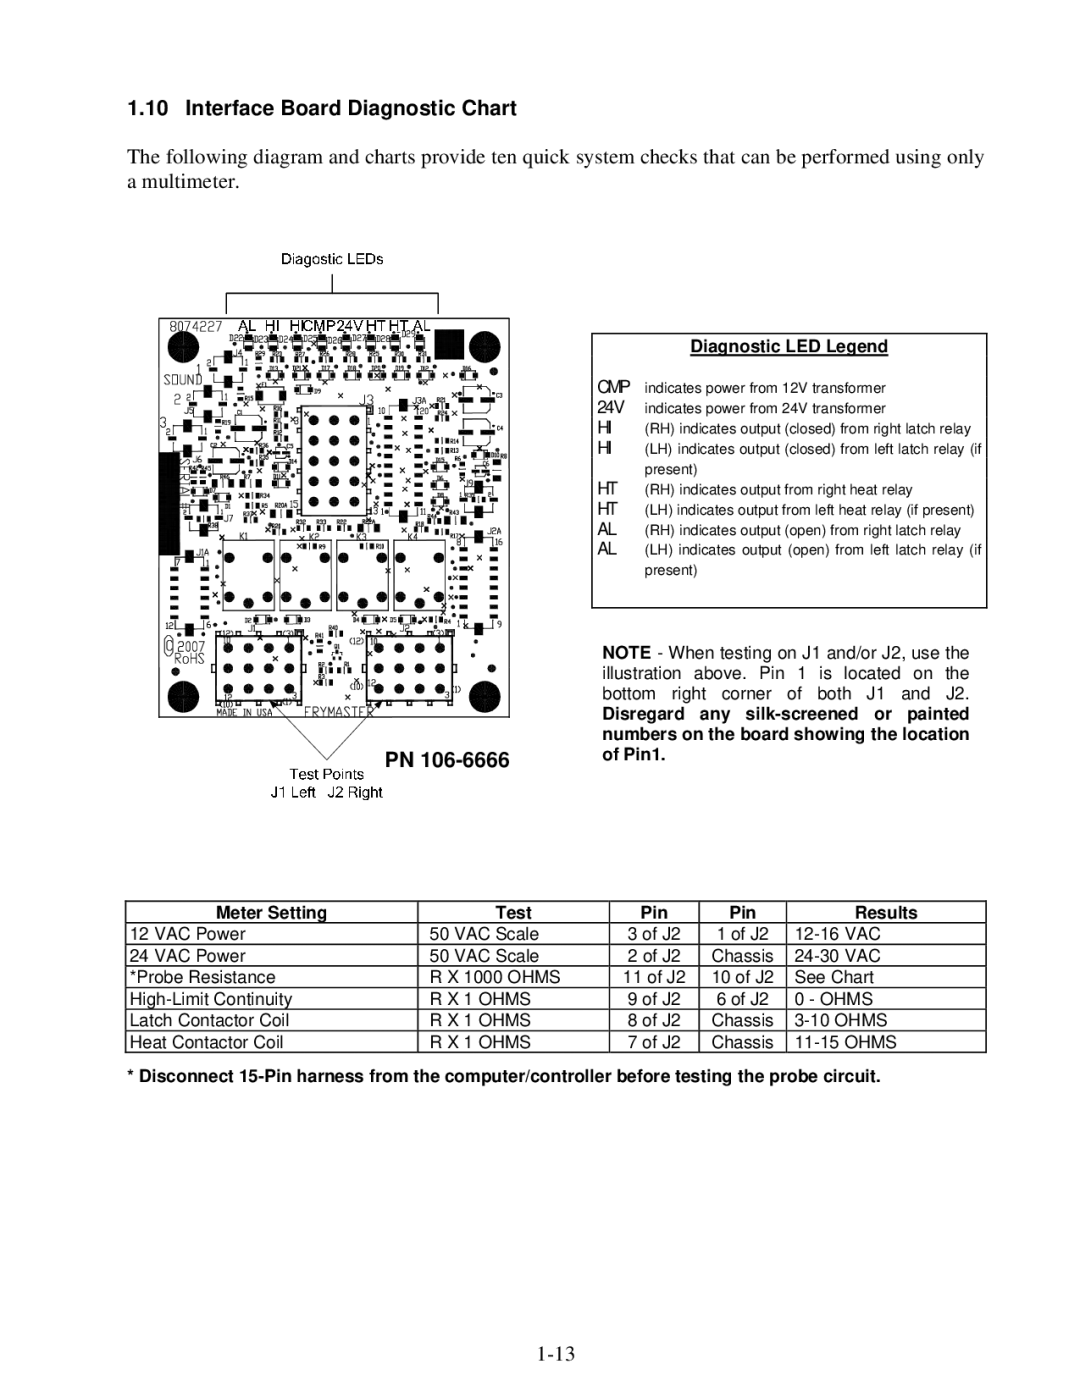 Frymaster 8196428 manual Interface Board Diagnostic Chart, Diagnostic LED Legend 